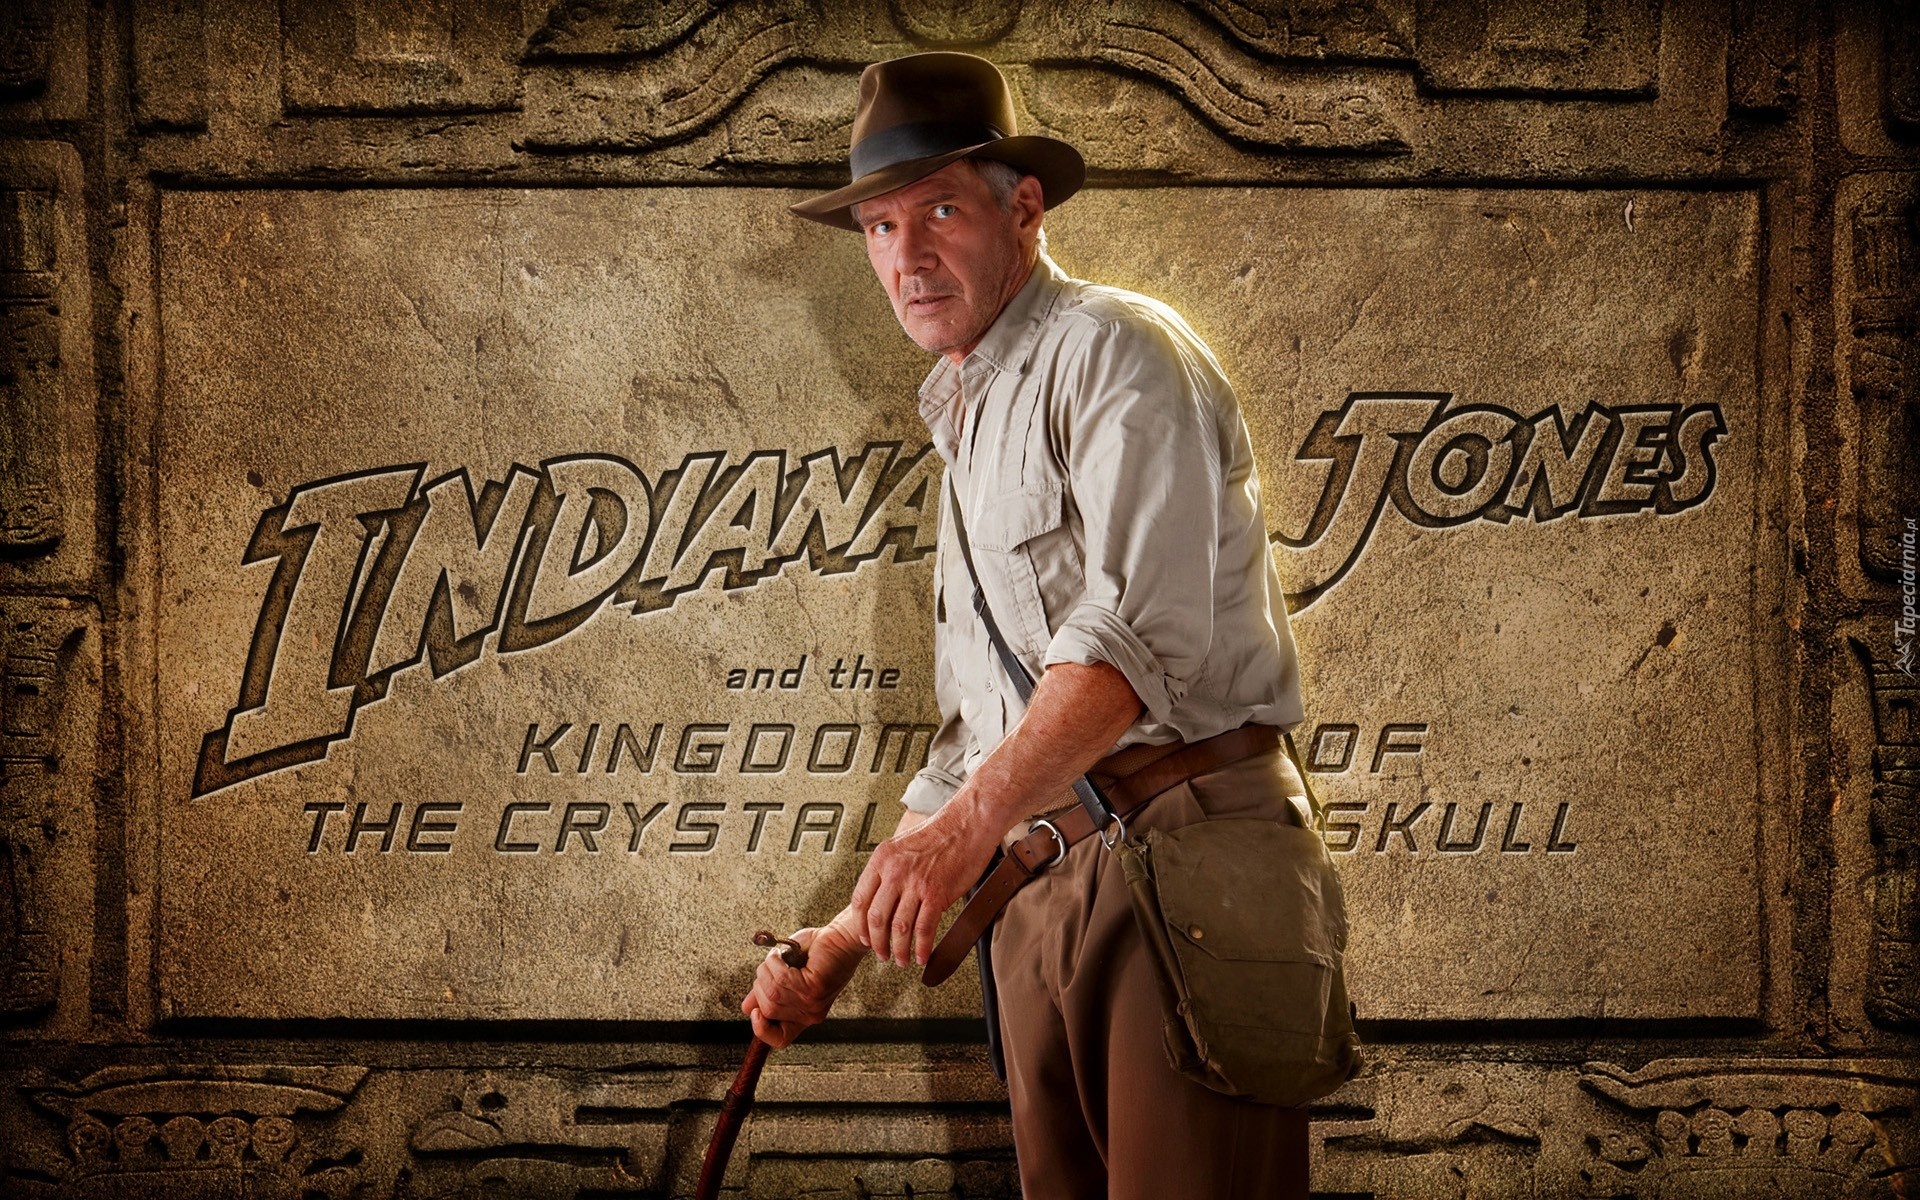 Film, Indiana Jones, Aktor, Harrison Ford